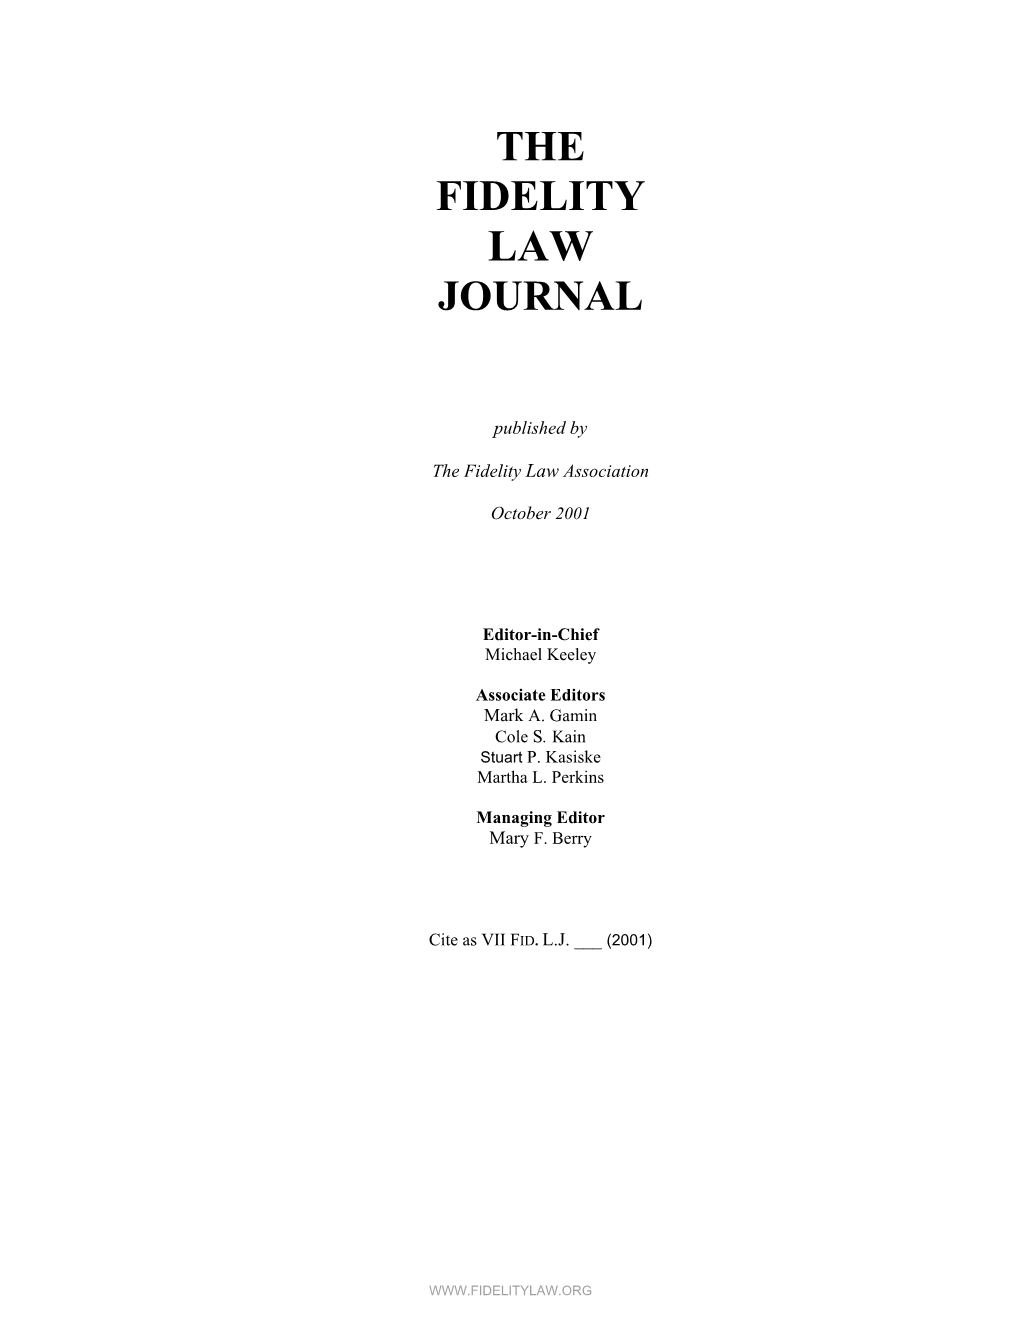 The Fidelity Journal